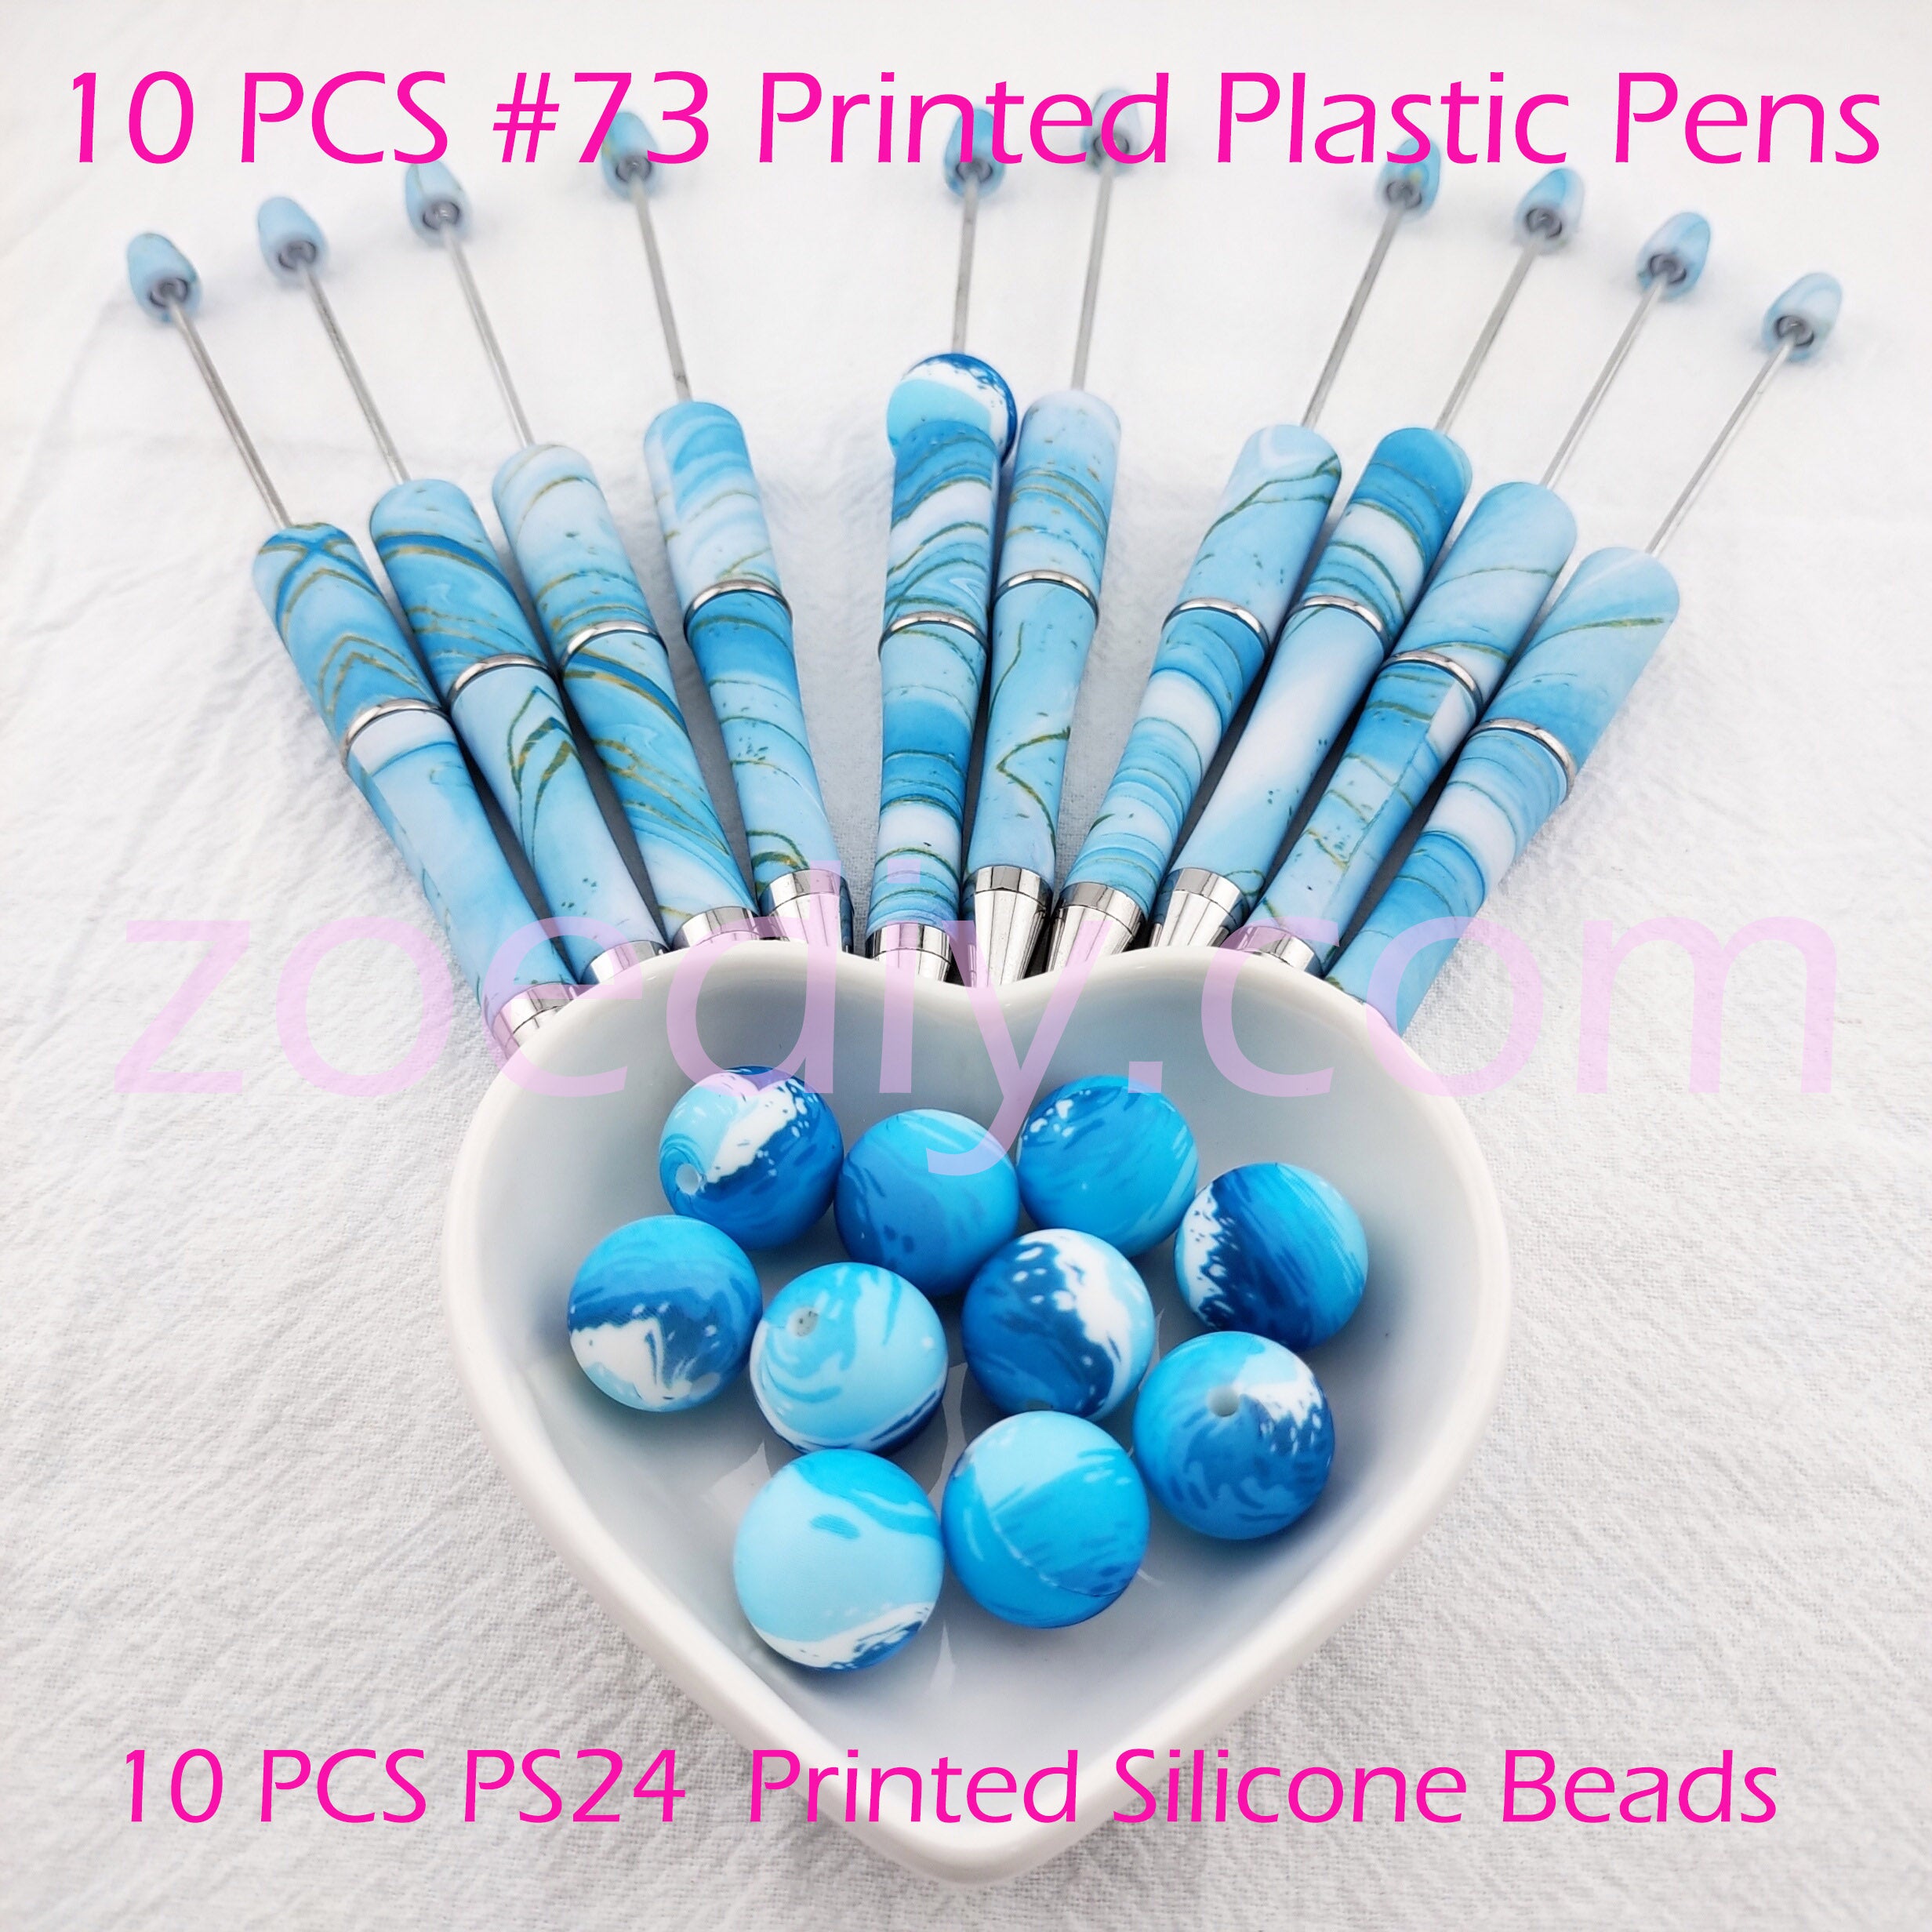 10 PCS Blue Ocean Marble #73 Printed Plastic Pens + 10 PCS PS24 Printed Silicone Beads SET